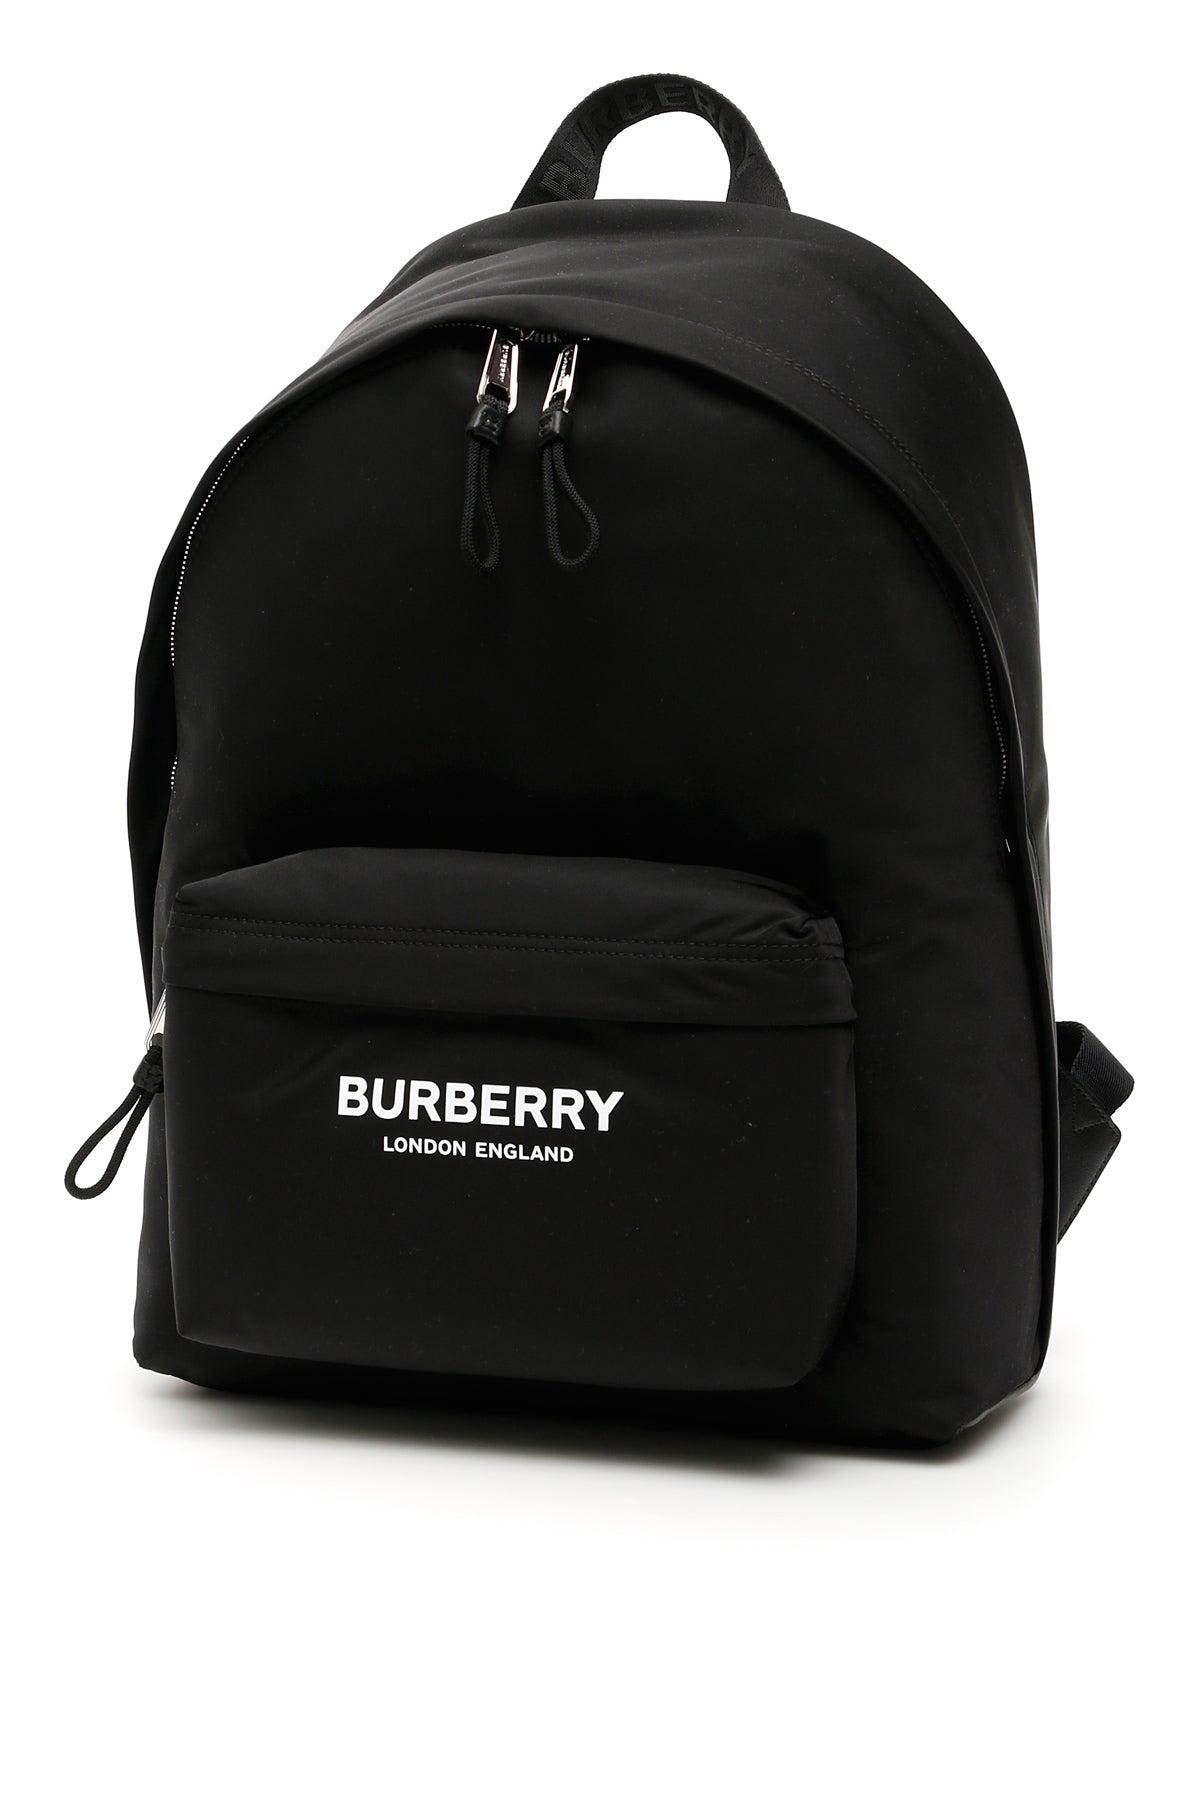 Burberry Logo Printed Backpack